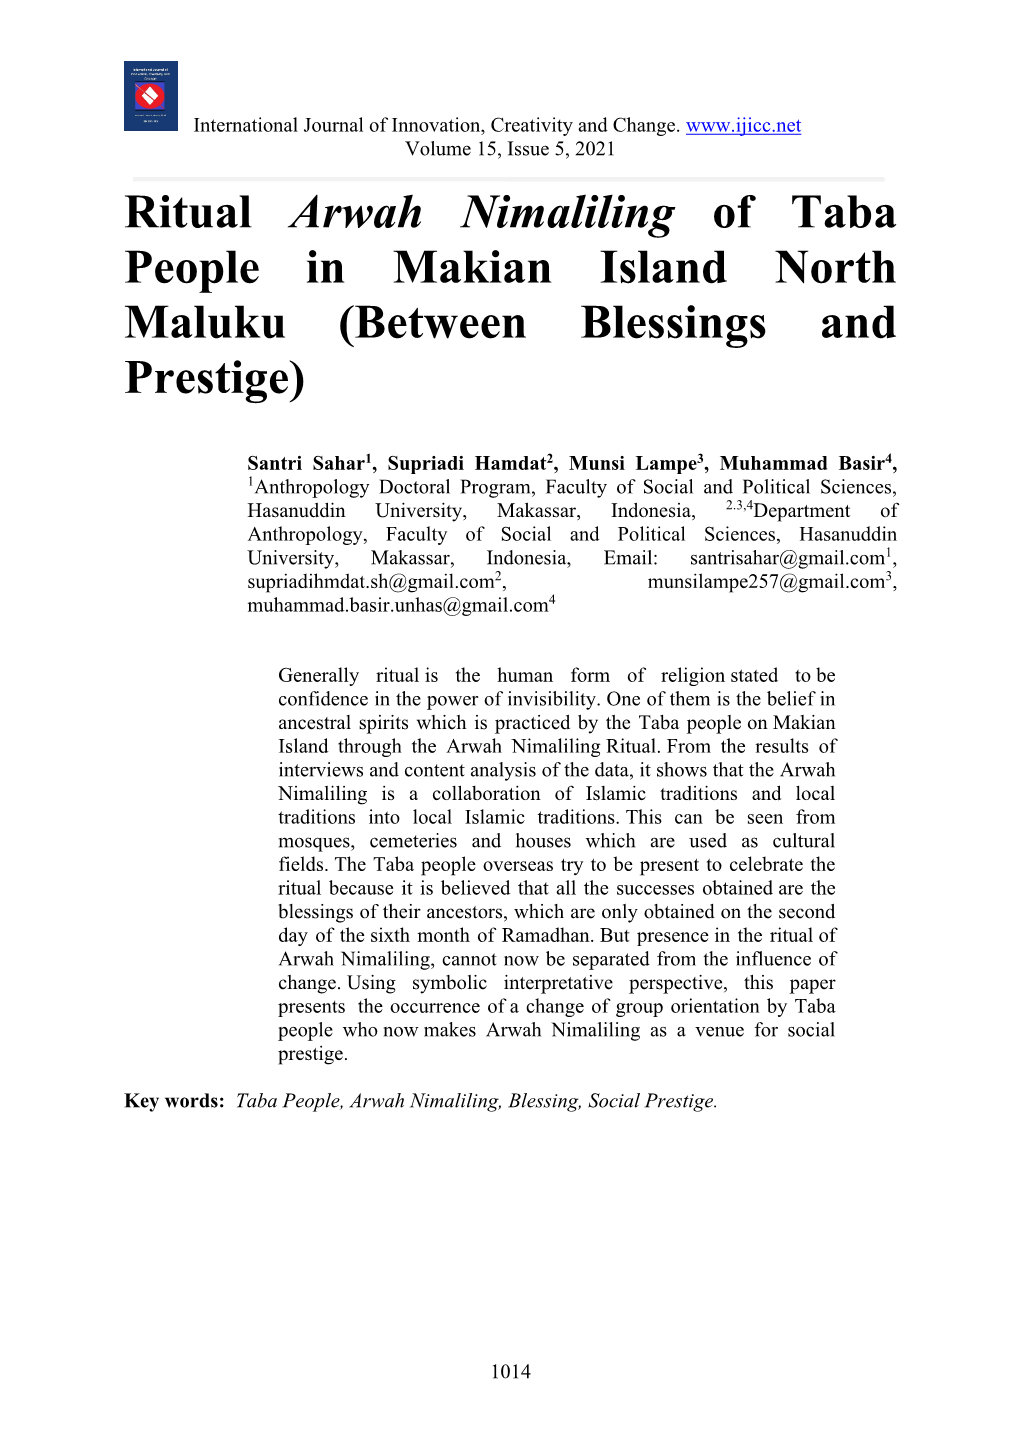 Ritual Arwah Nimaliling of Taba People in Makian Island North Maluku (Between Blessings and Prestige)